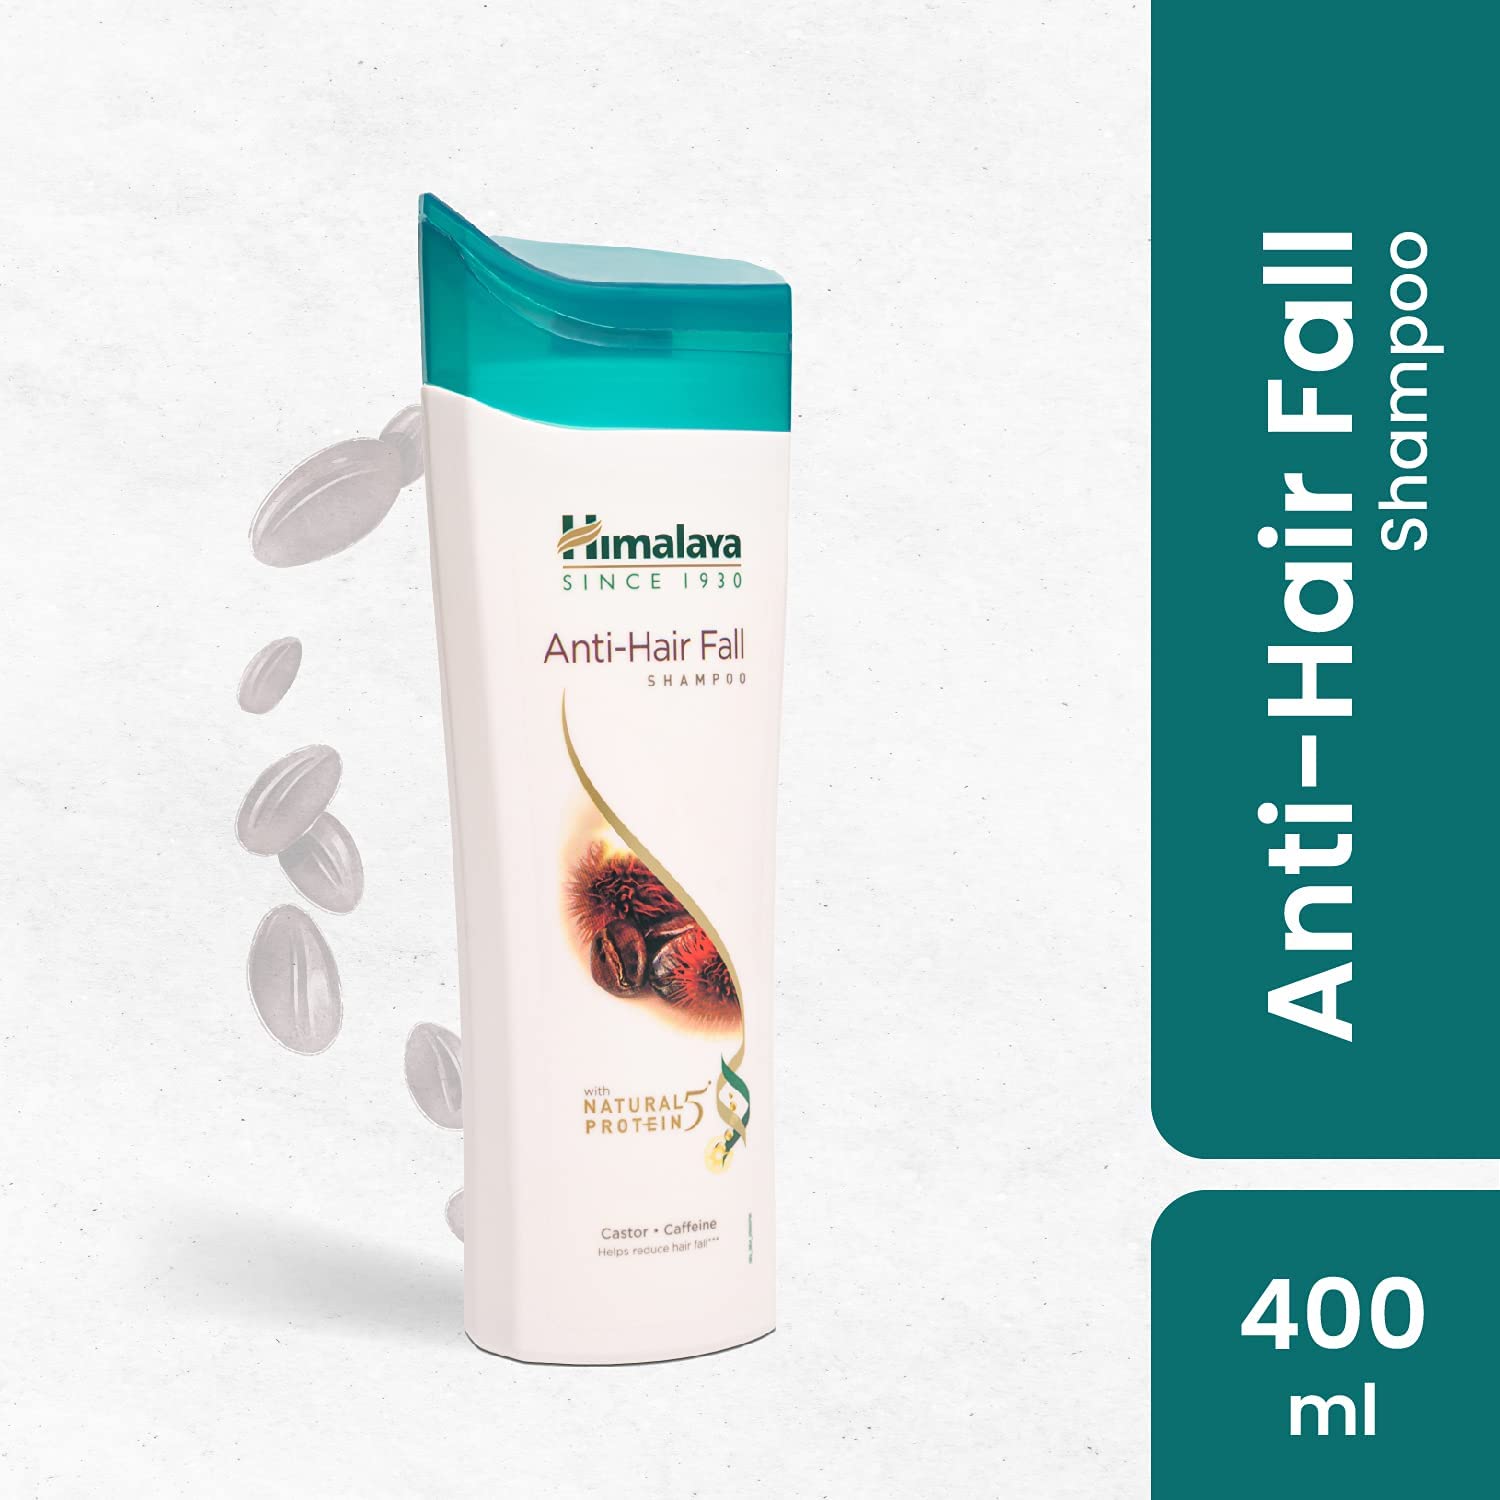 Himalaya Anti-Hair Fall Shampoo - 400 ml (Pack of 3)